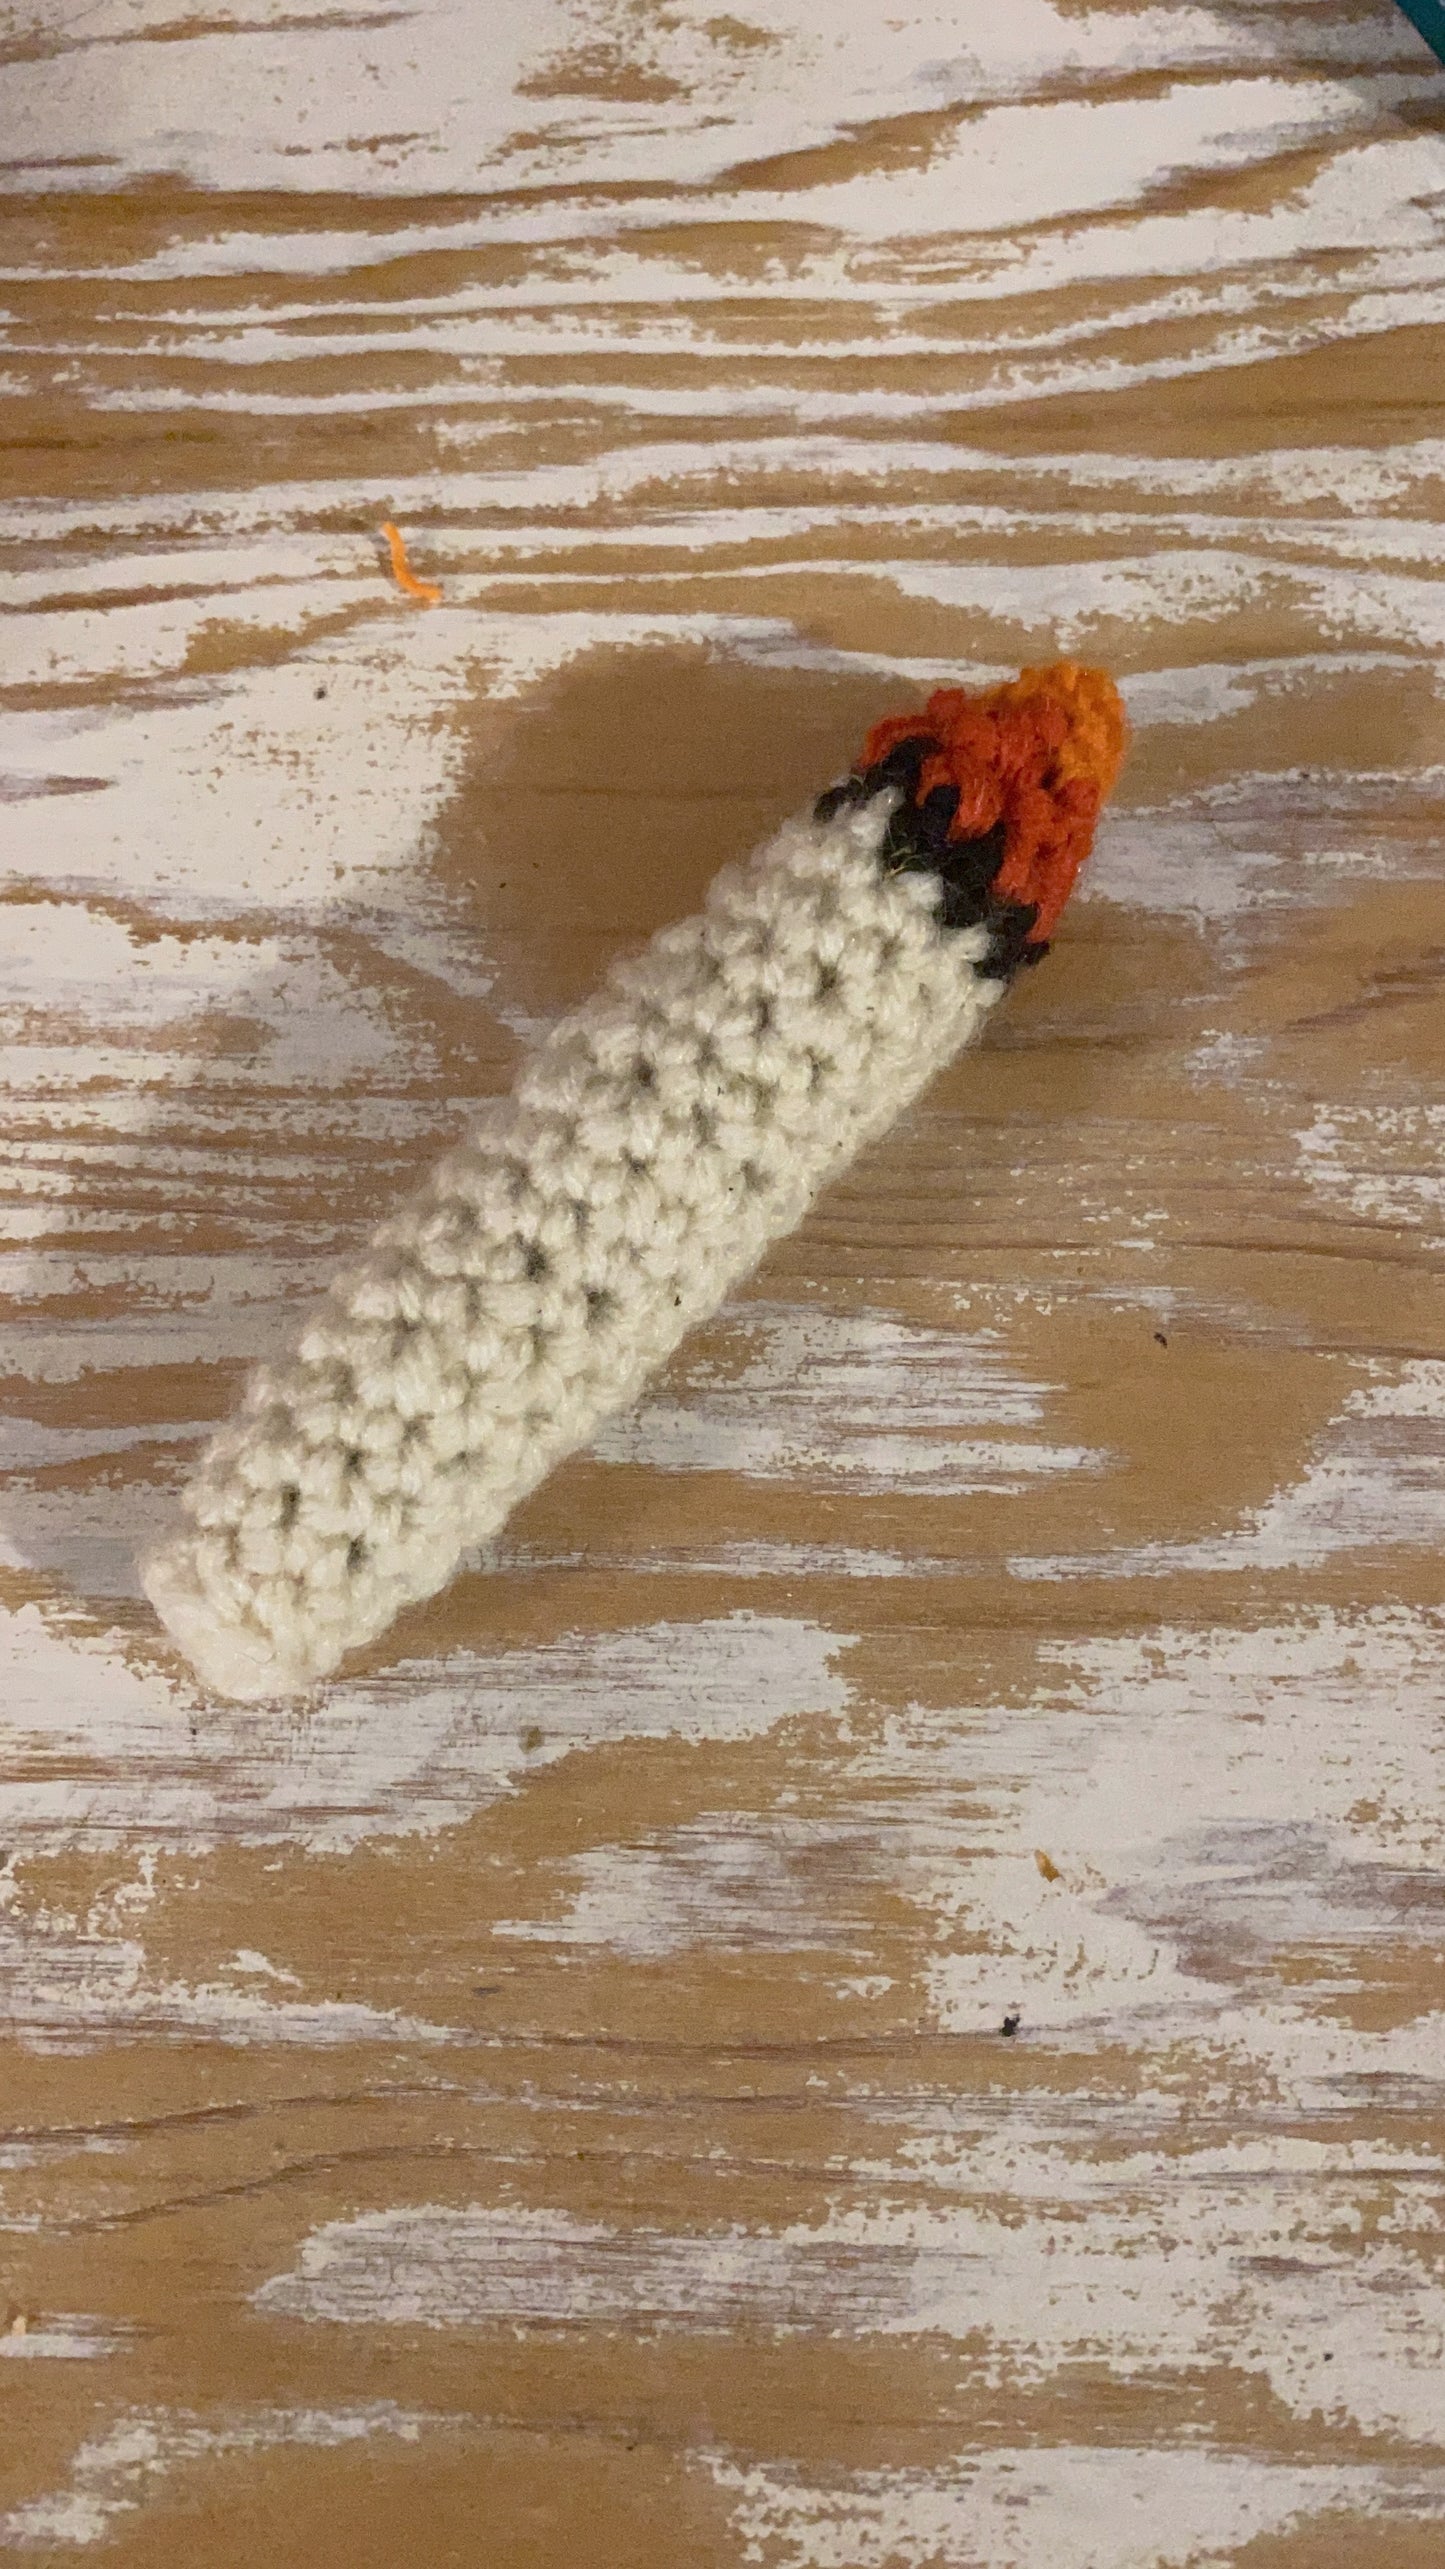 Crochet Cat Nip “Joint”